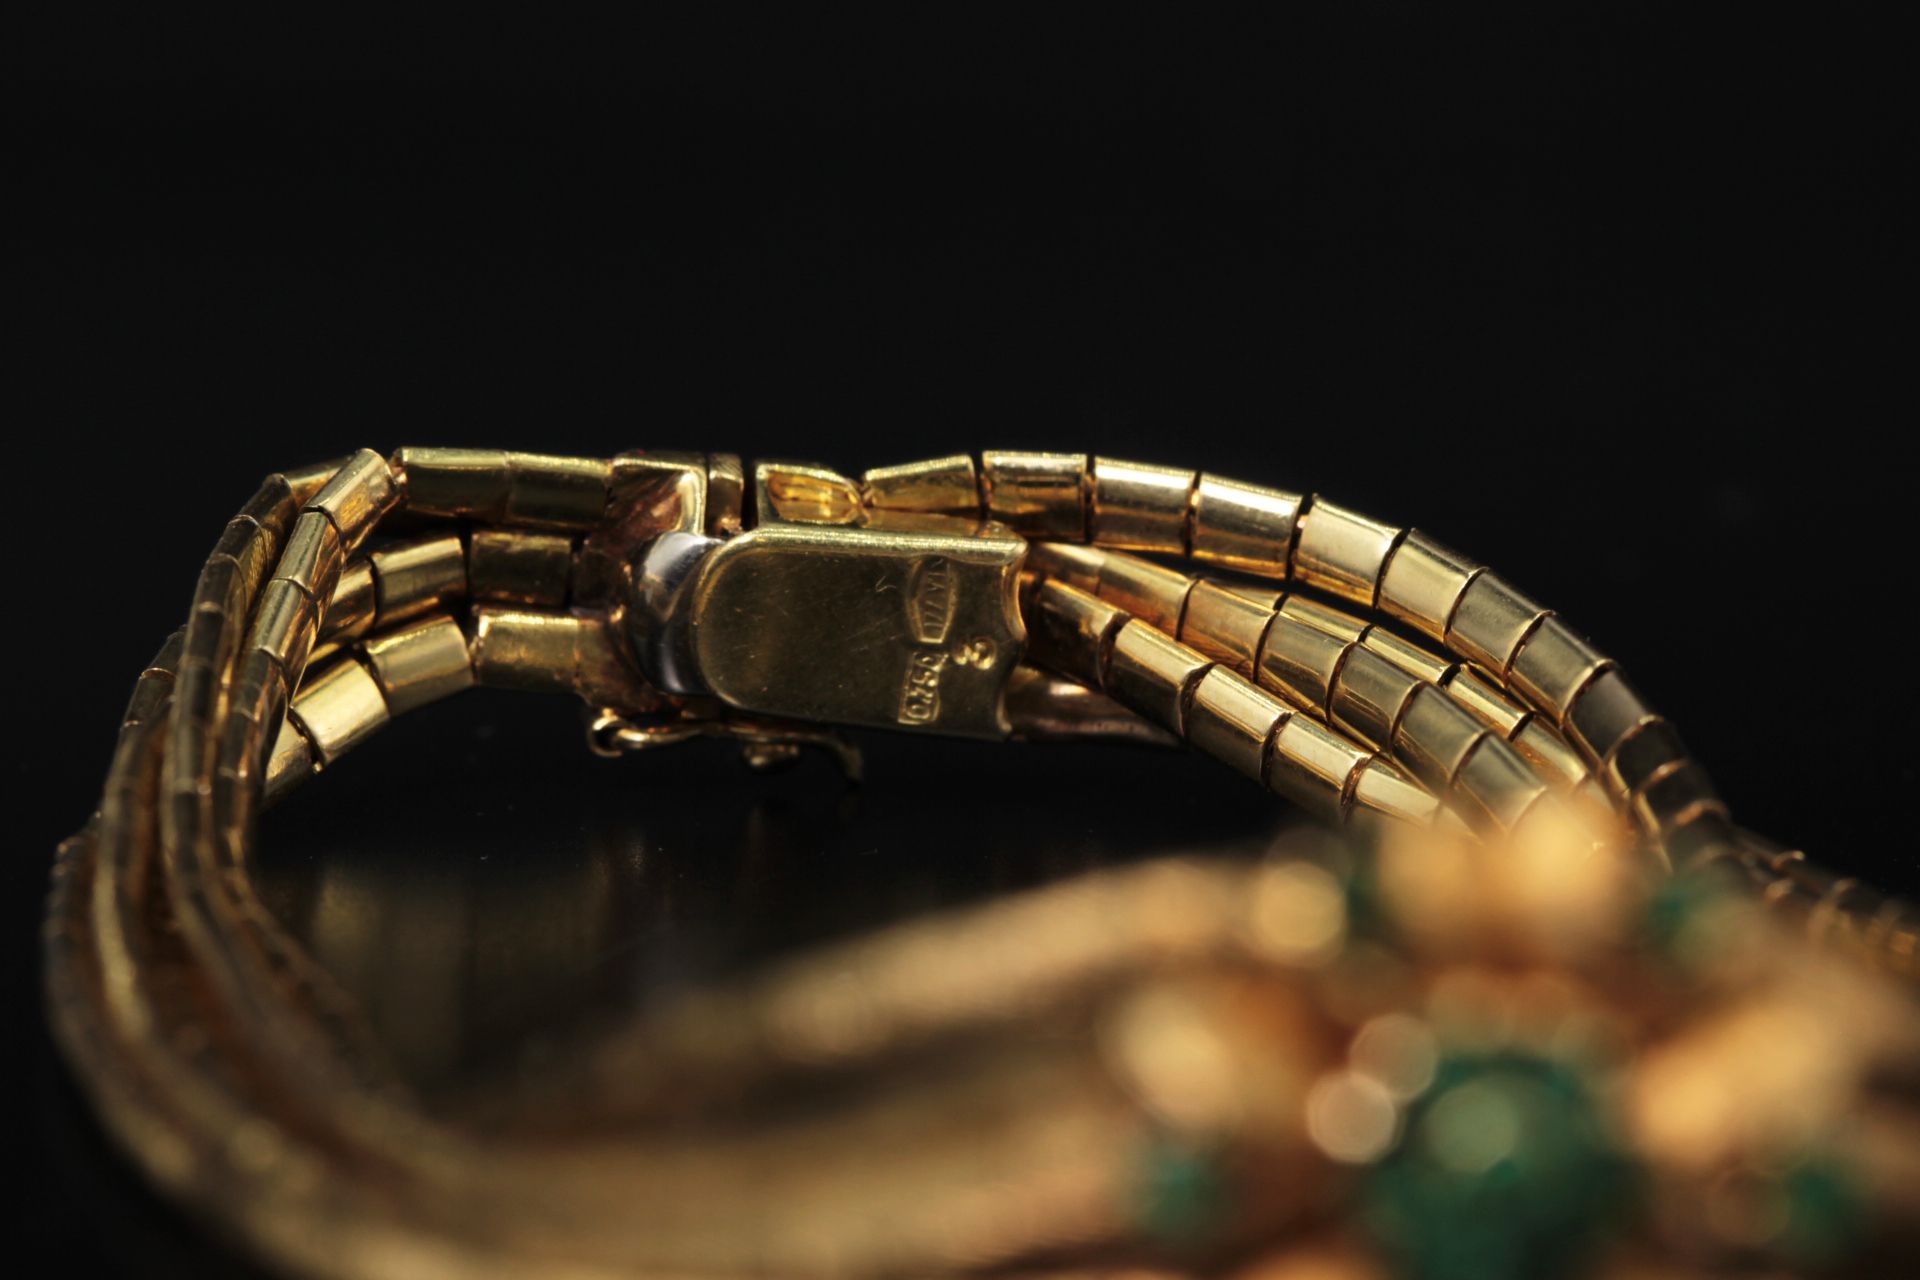 Italian 18K Gold bracelet with Emeralds - Image 4 of 4